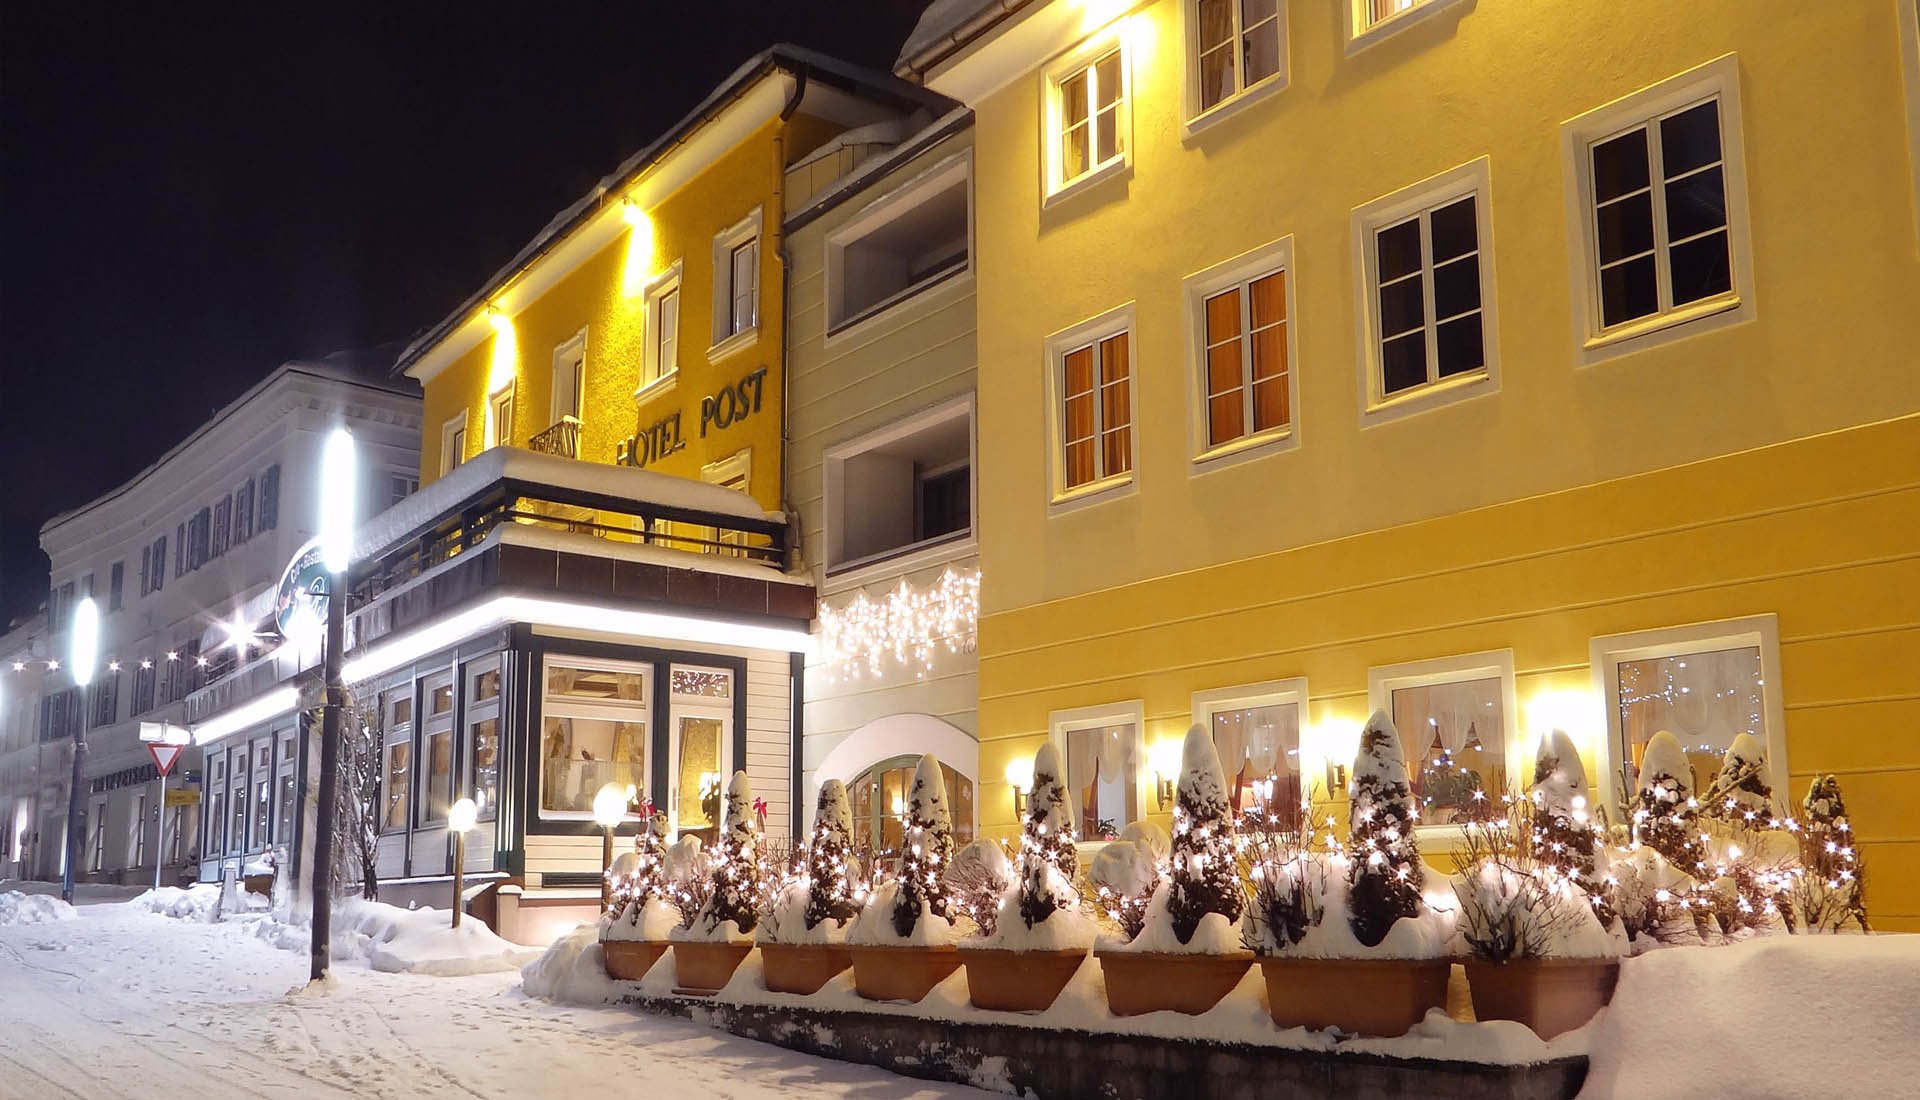 Posthotel Radstadts Almenweg Wanderpauschale | 3 Nächte – Hotel Post Walter (3 Sterne), Salzburger Land inkl. Halbpension